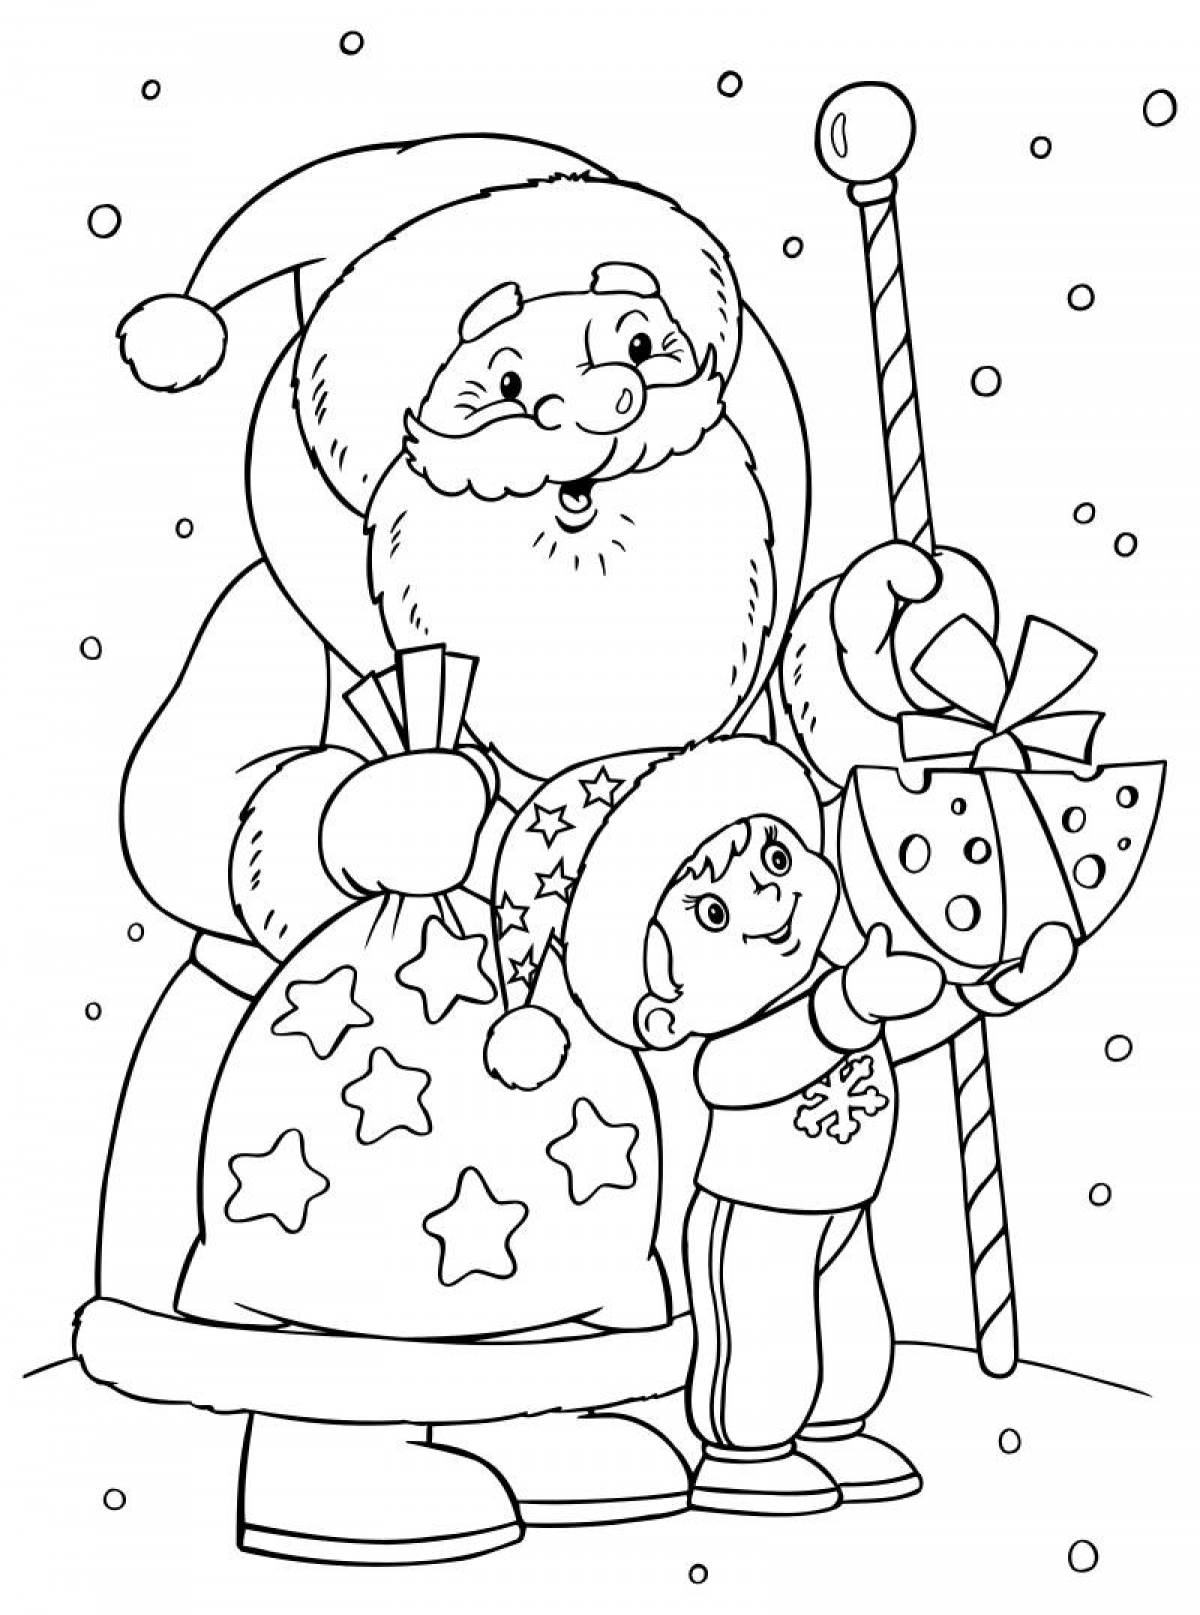 Joyful Christmas drawings